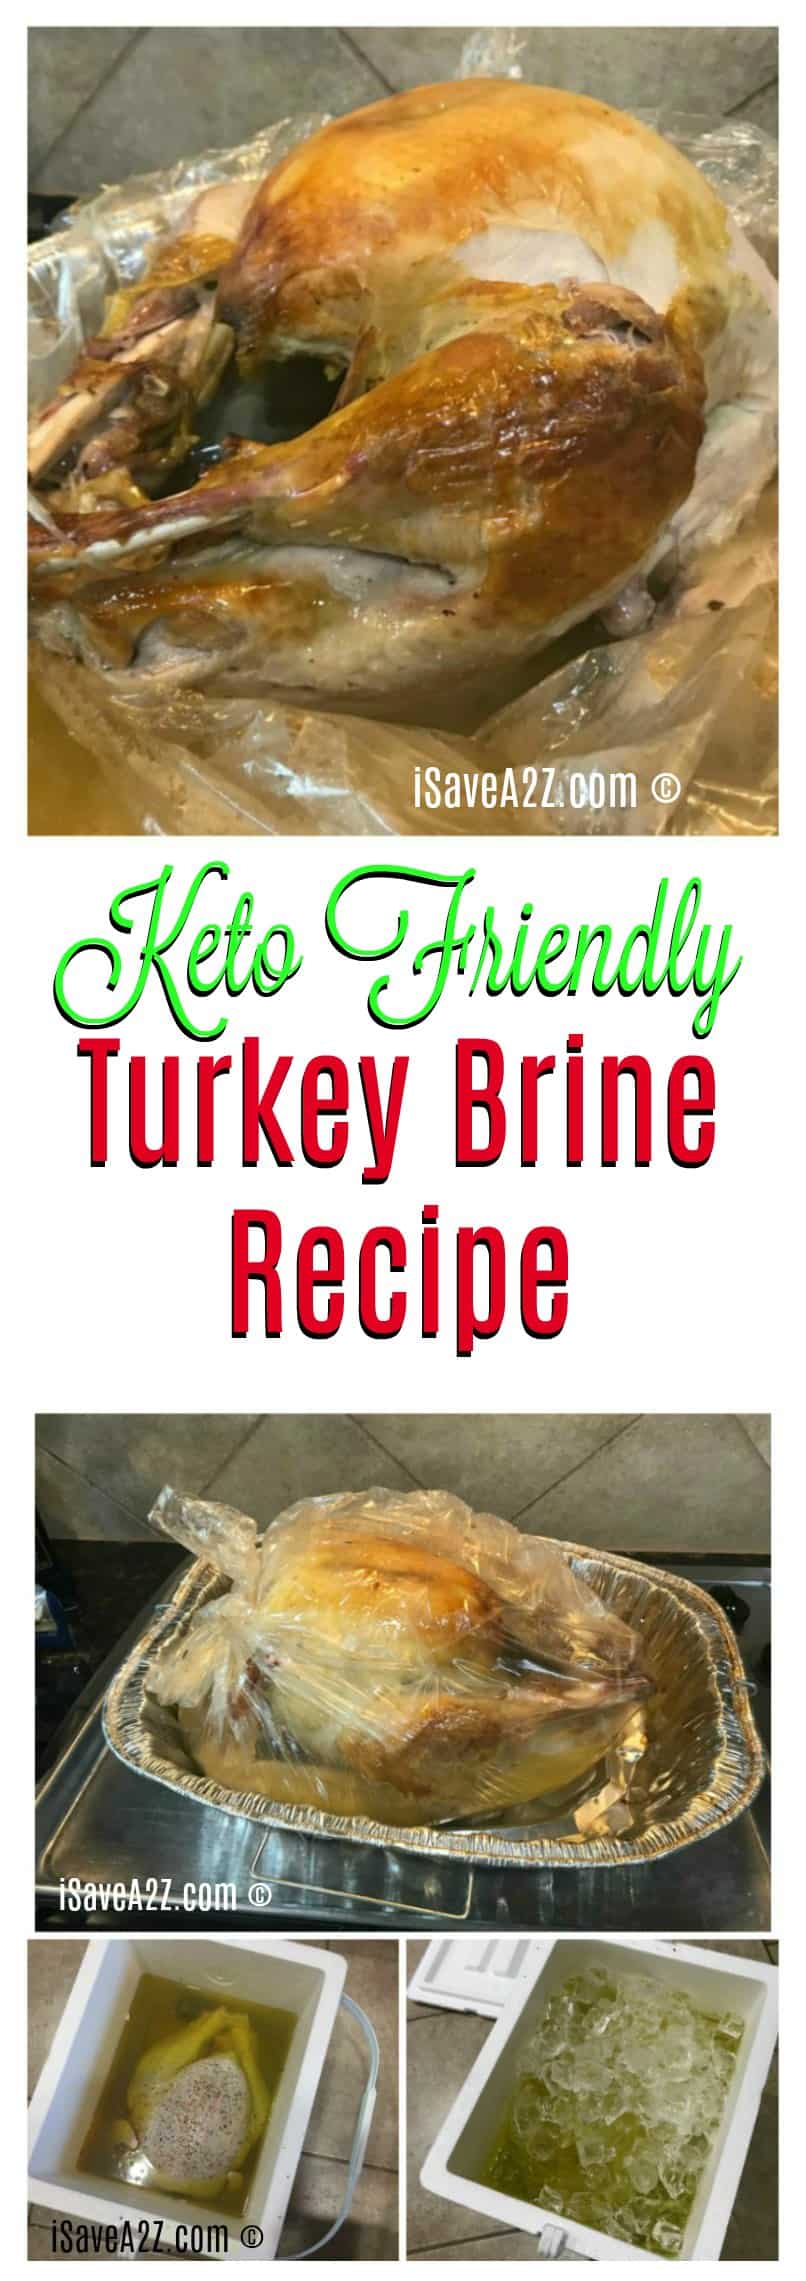 Keto Pickle Juice Brine Turkey Recipe 